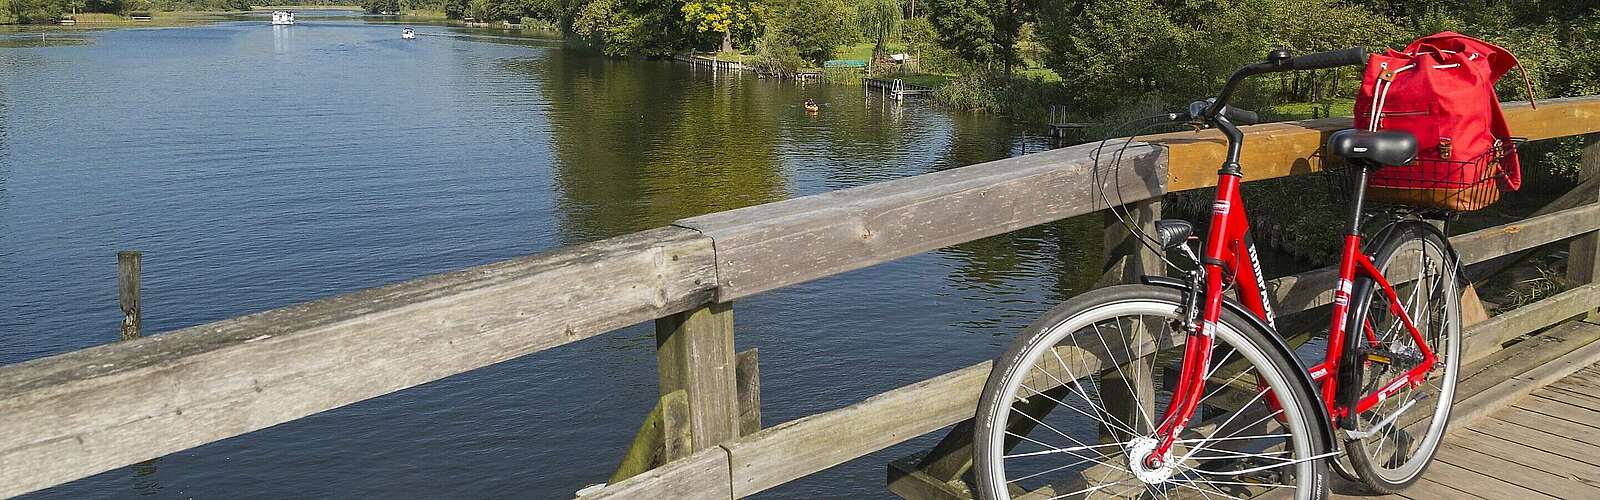 Fahrrad auf Brücke,
        
    

        Foto: Fotograf / Lizenz - Media Import/Steffen Lehmann